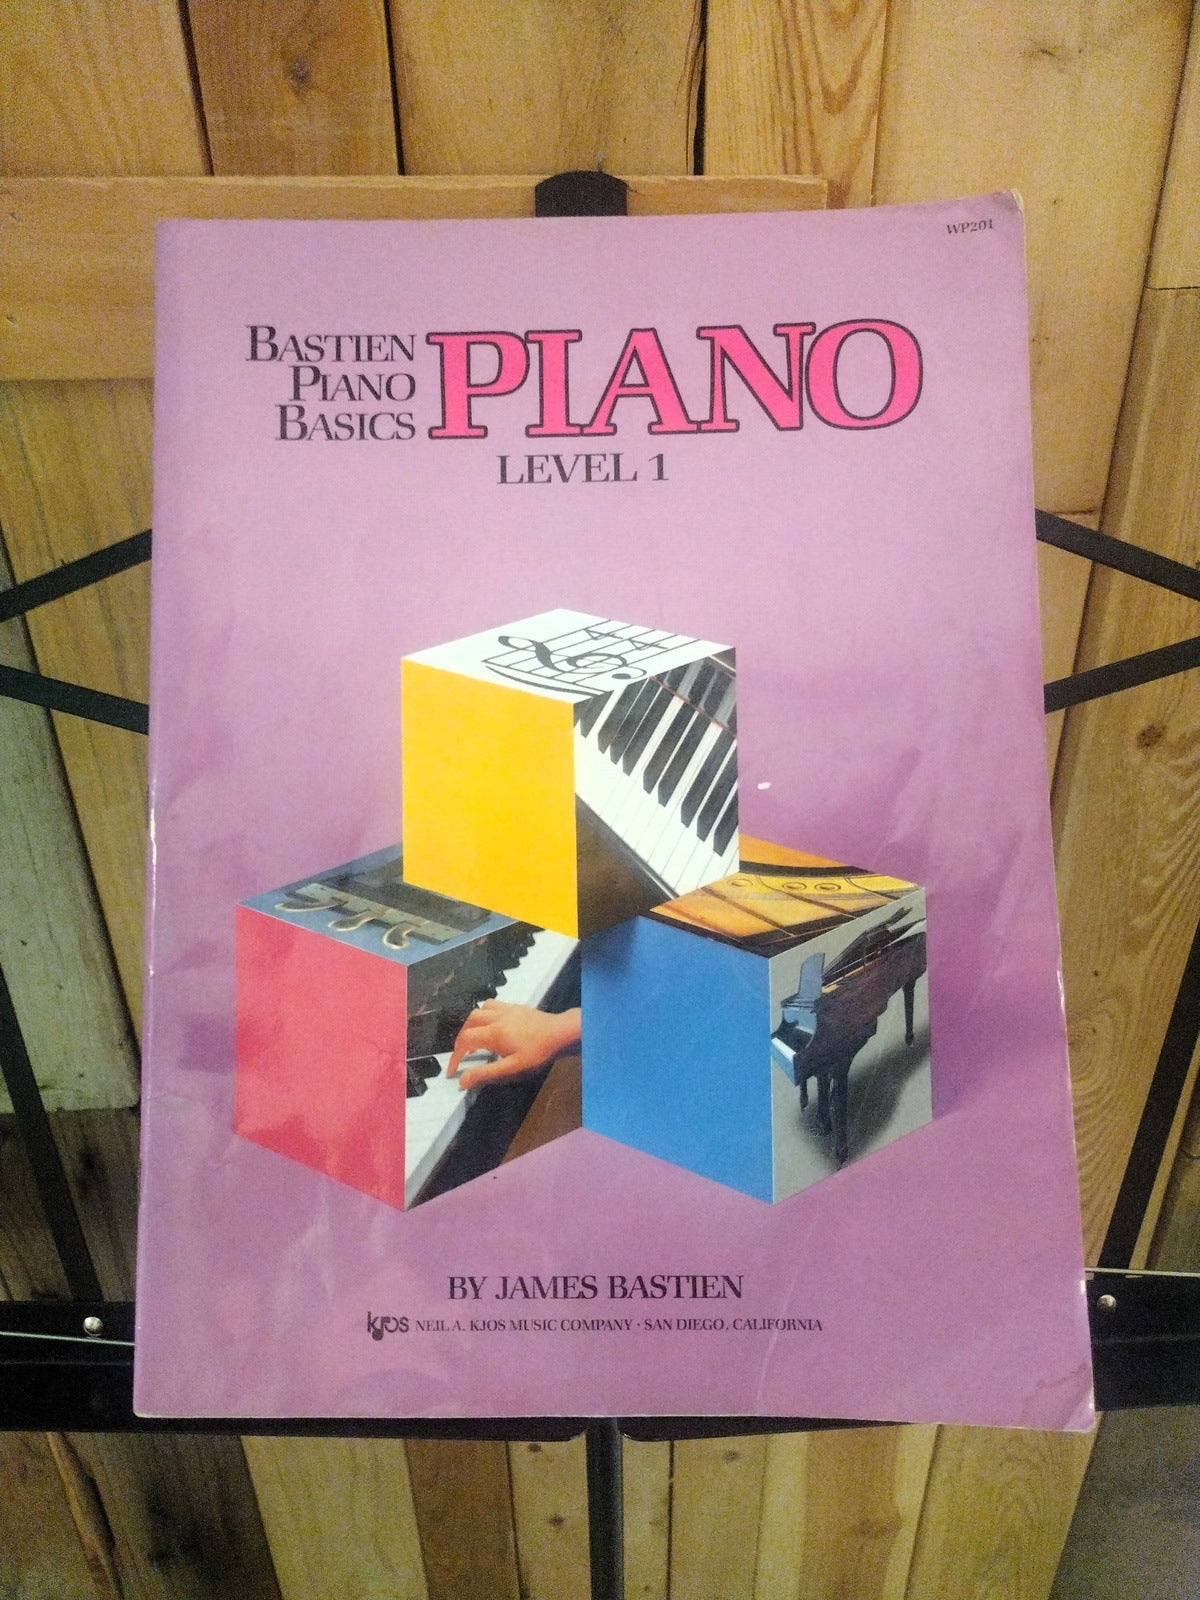 Bastien Piano Basics Book Level 1 - Used